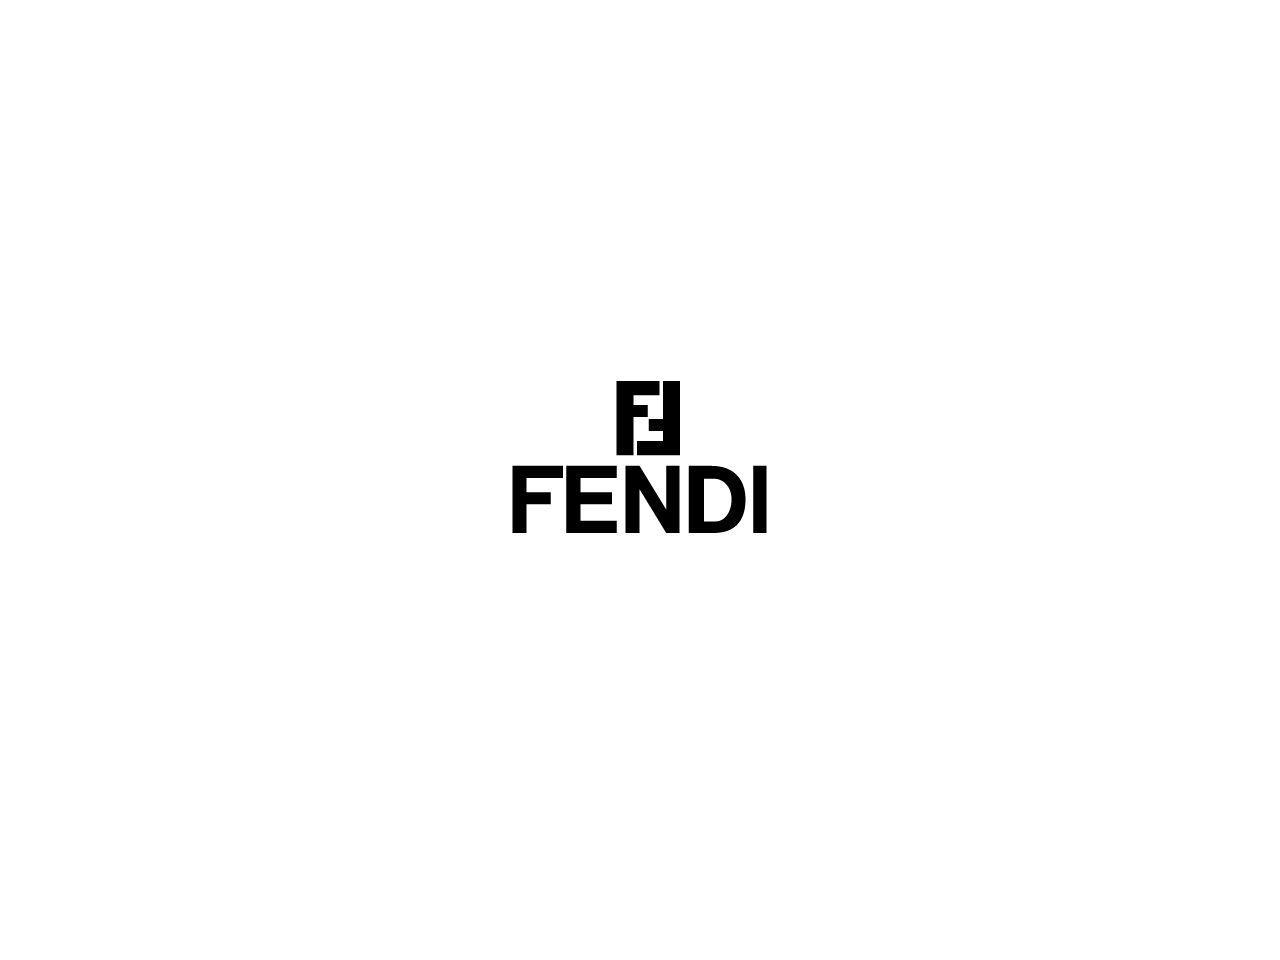 Fendi Logo Wallpaper Picture to